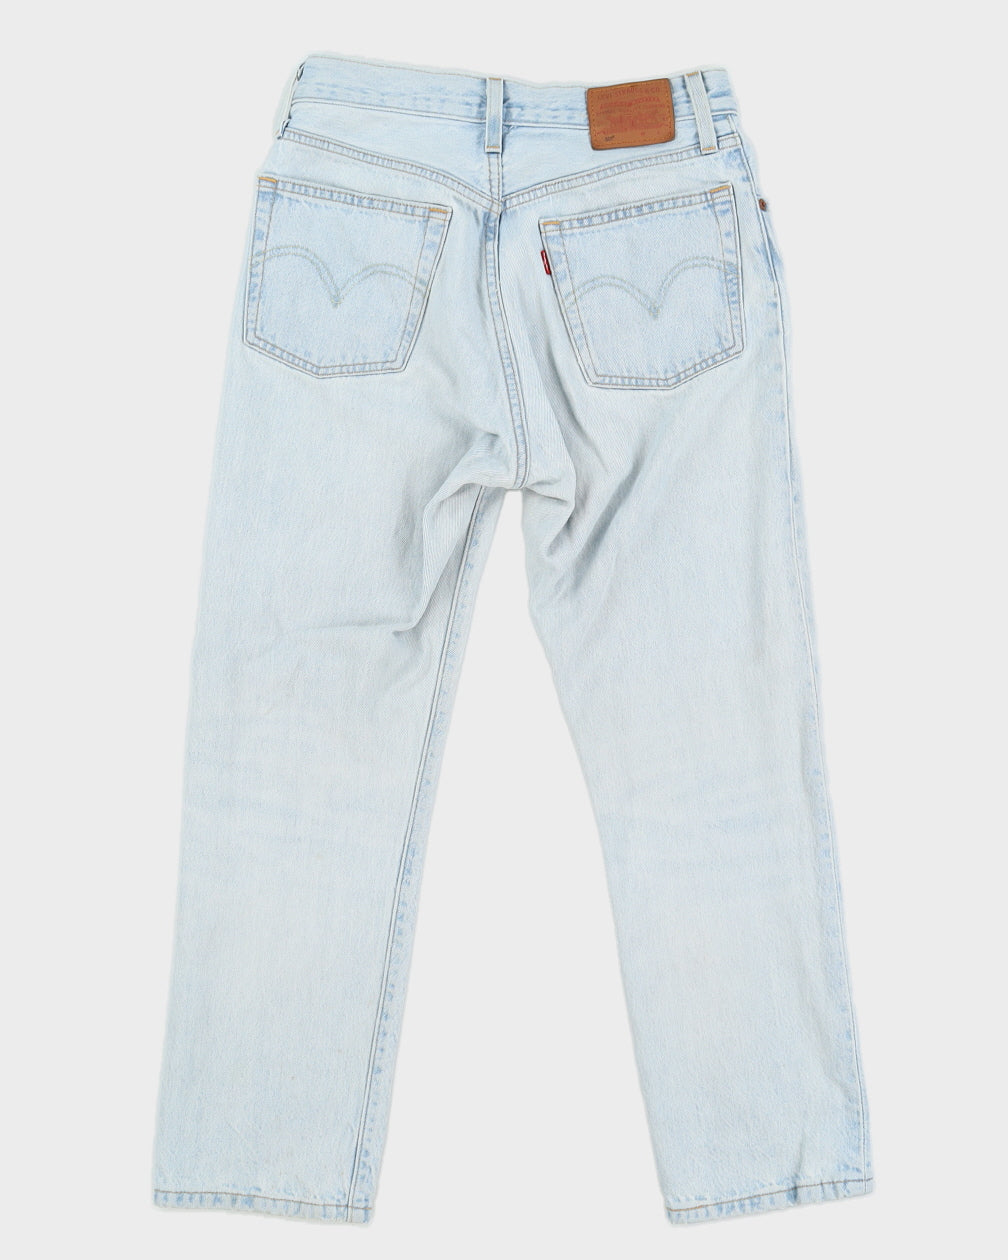 Levi's Light Wash 501 Denim Jeans - W26 L26